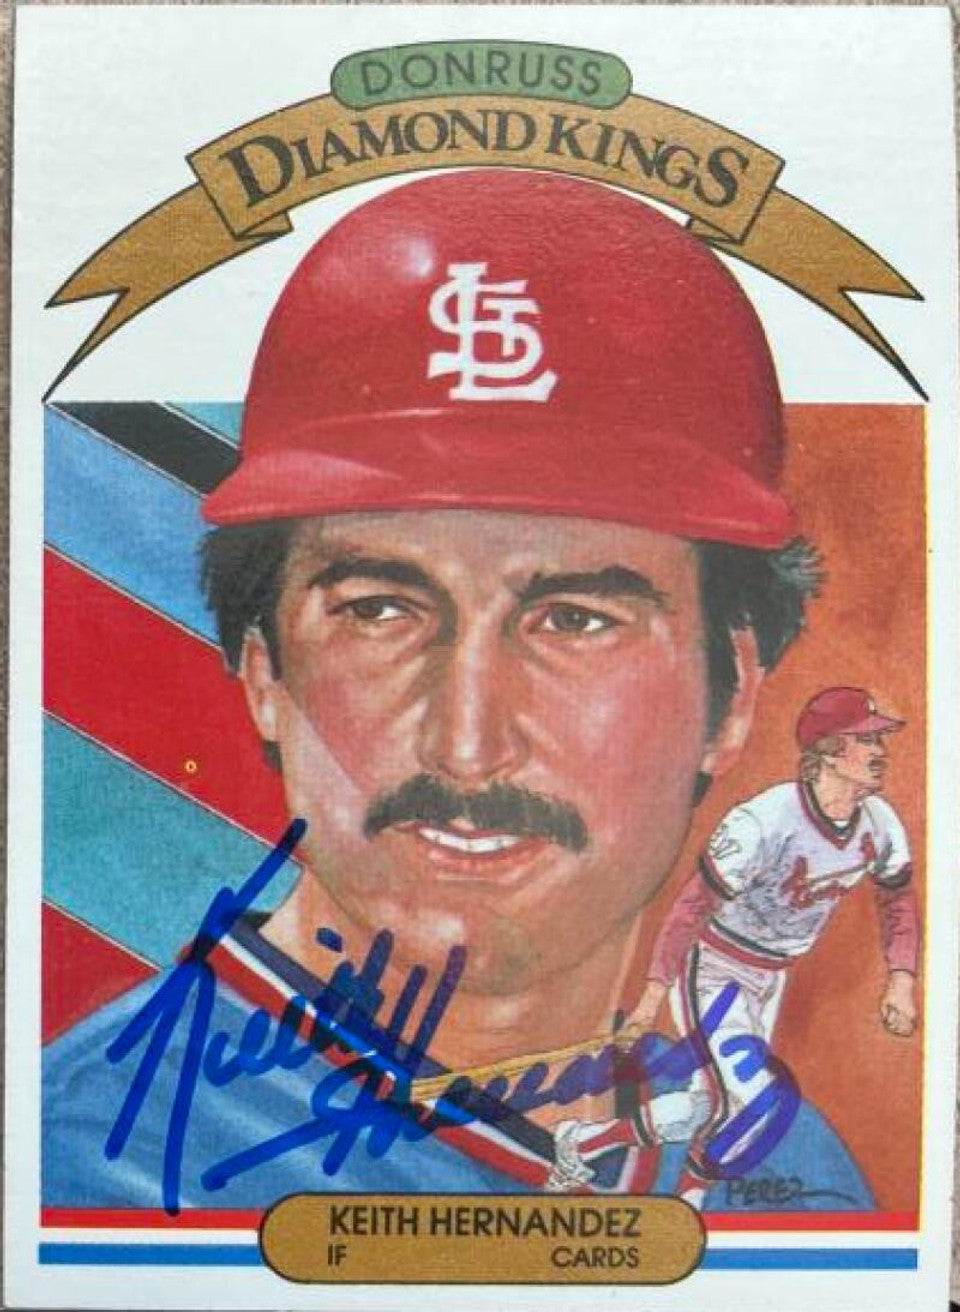 Keith Hernandez Signed 1983 Donruss Diamond Kings Baseball Card - St Louis Cardinals